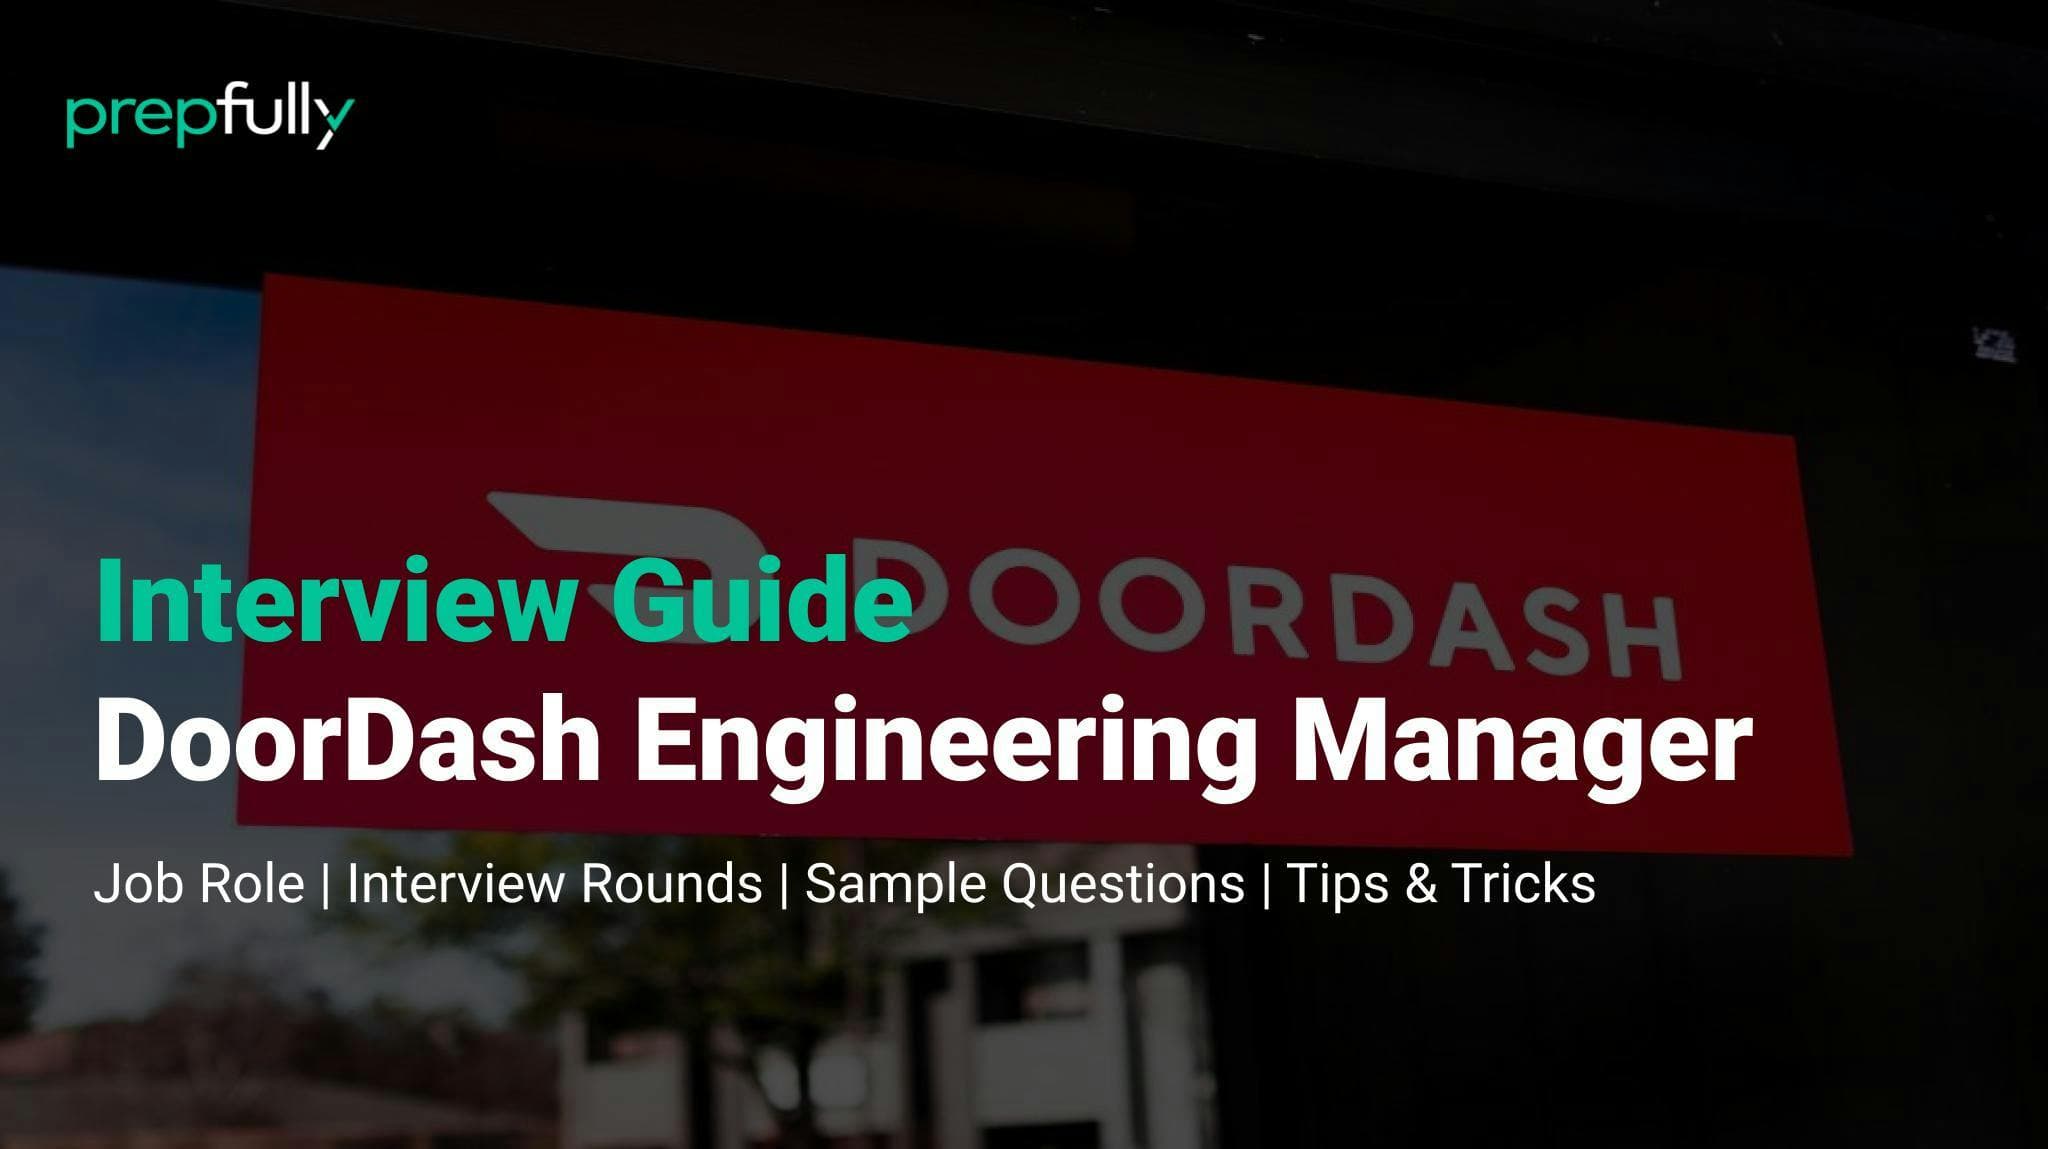 DoorDash engineering manager interview process